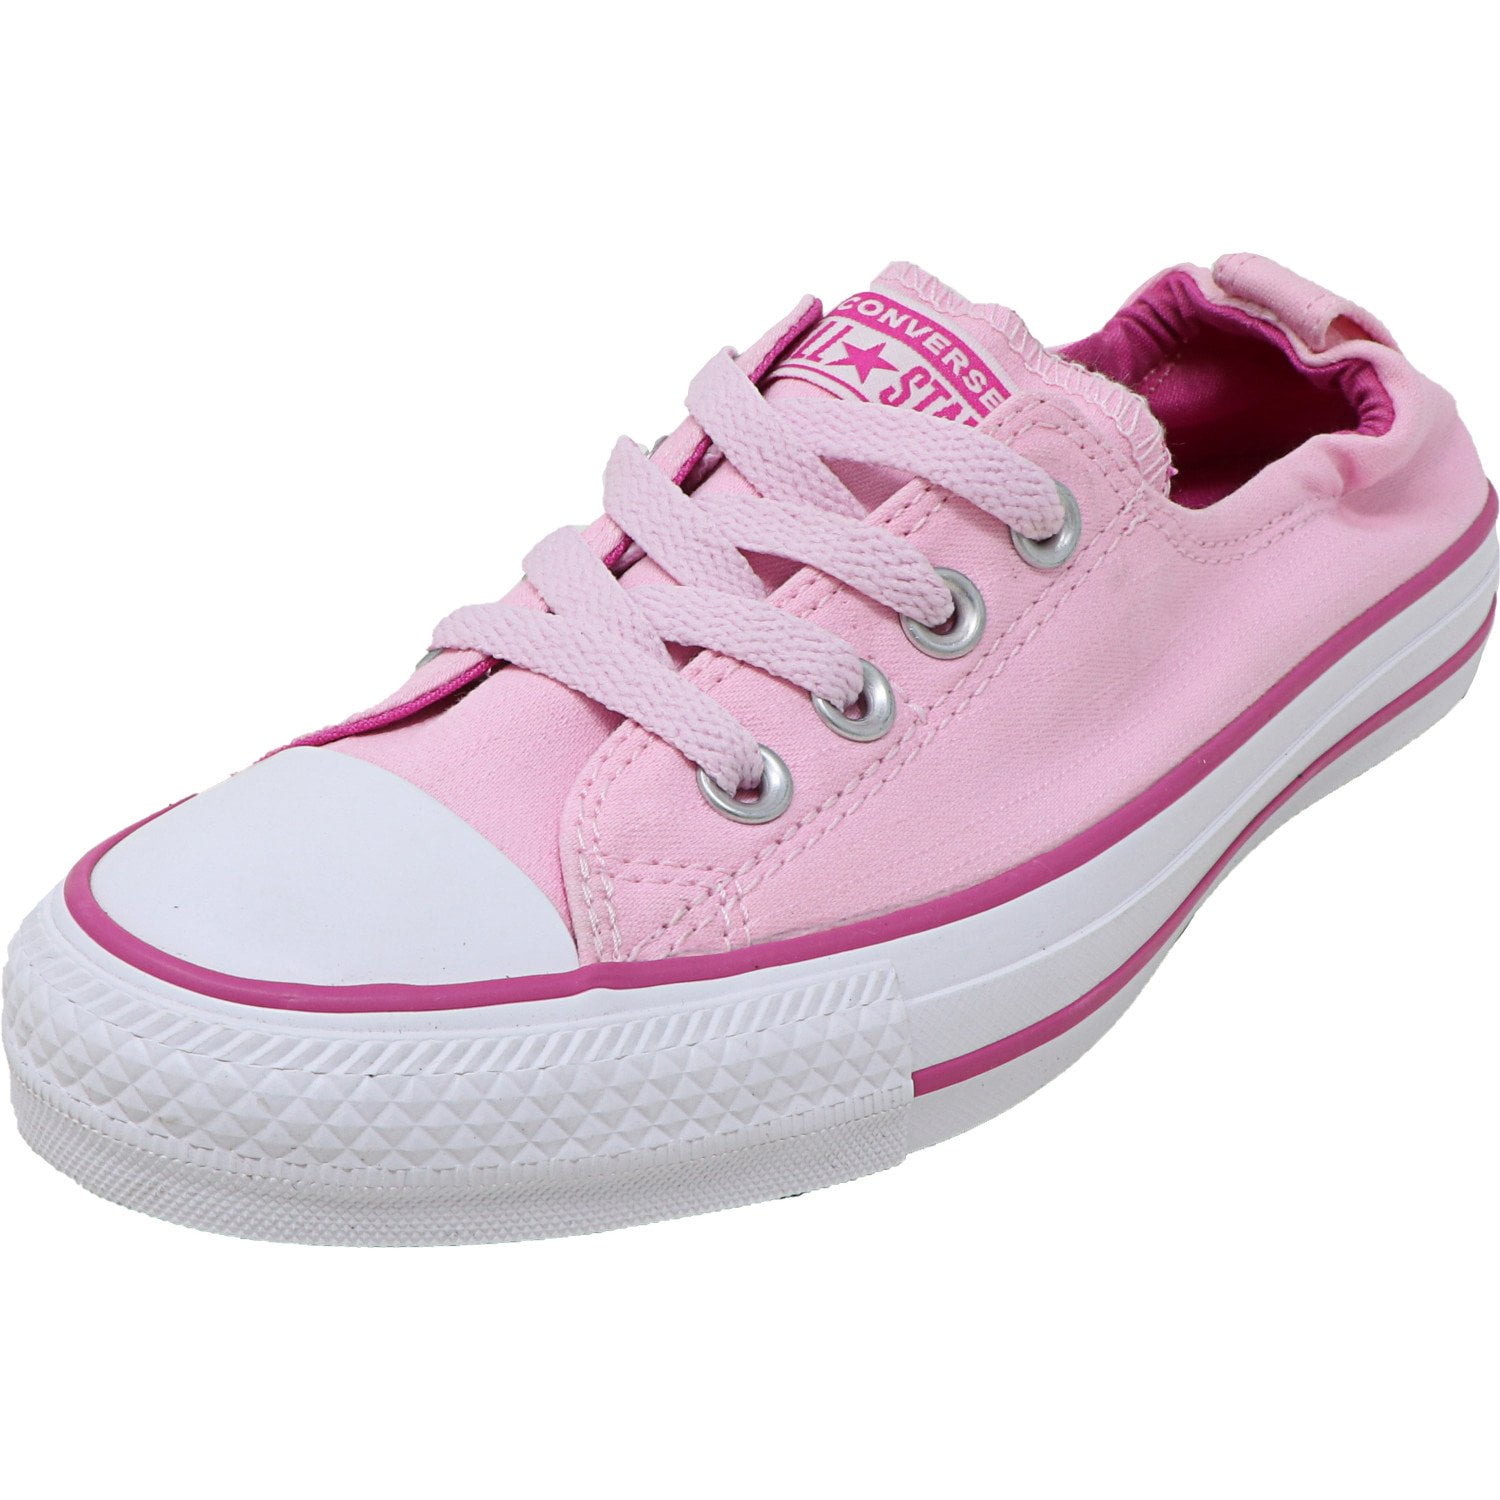 Converse Women's Chuck All Star Shoreline Pink Foam / Active Fuchsia White Low Top Sneaker - 5M Walmart.com